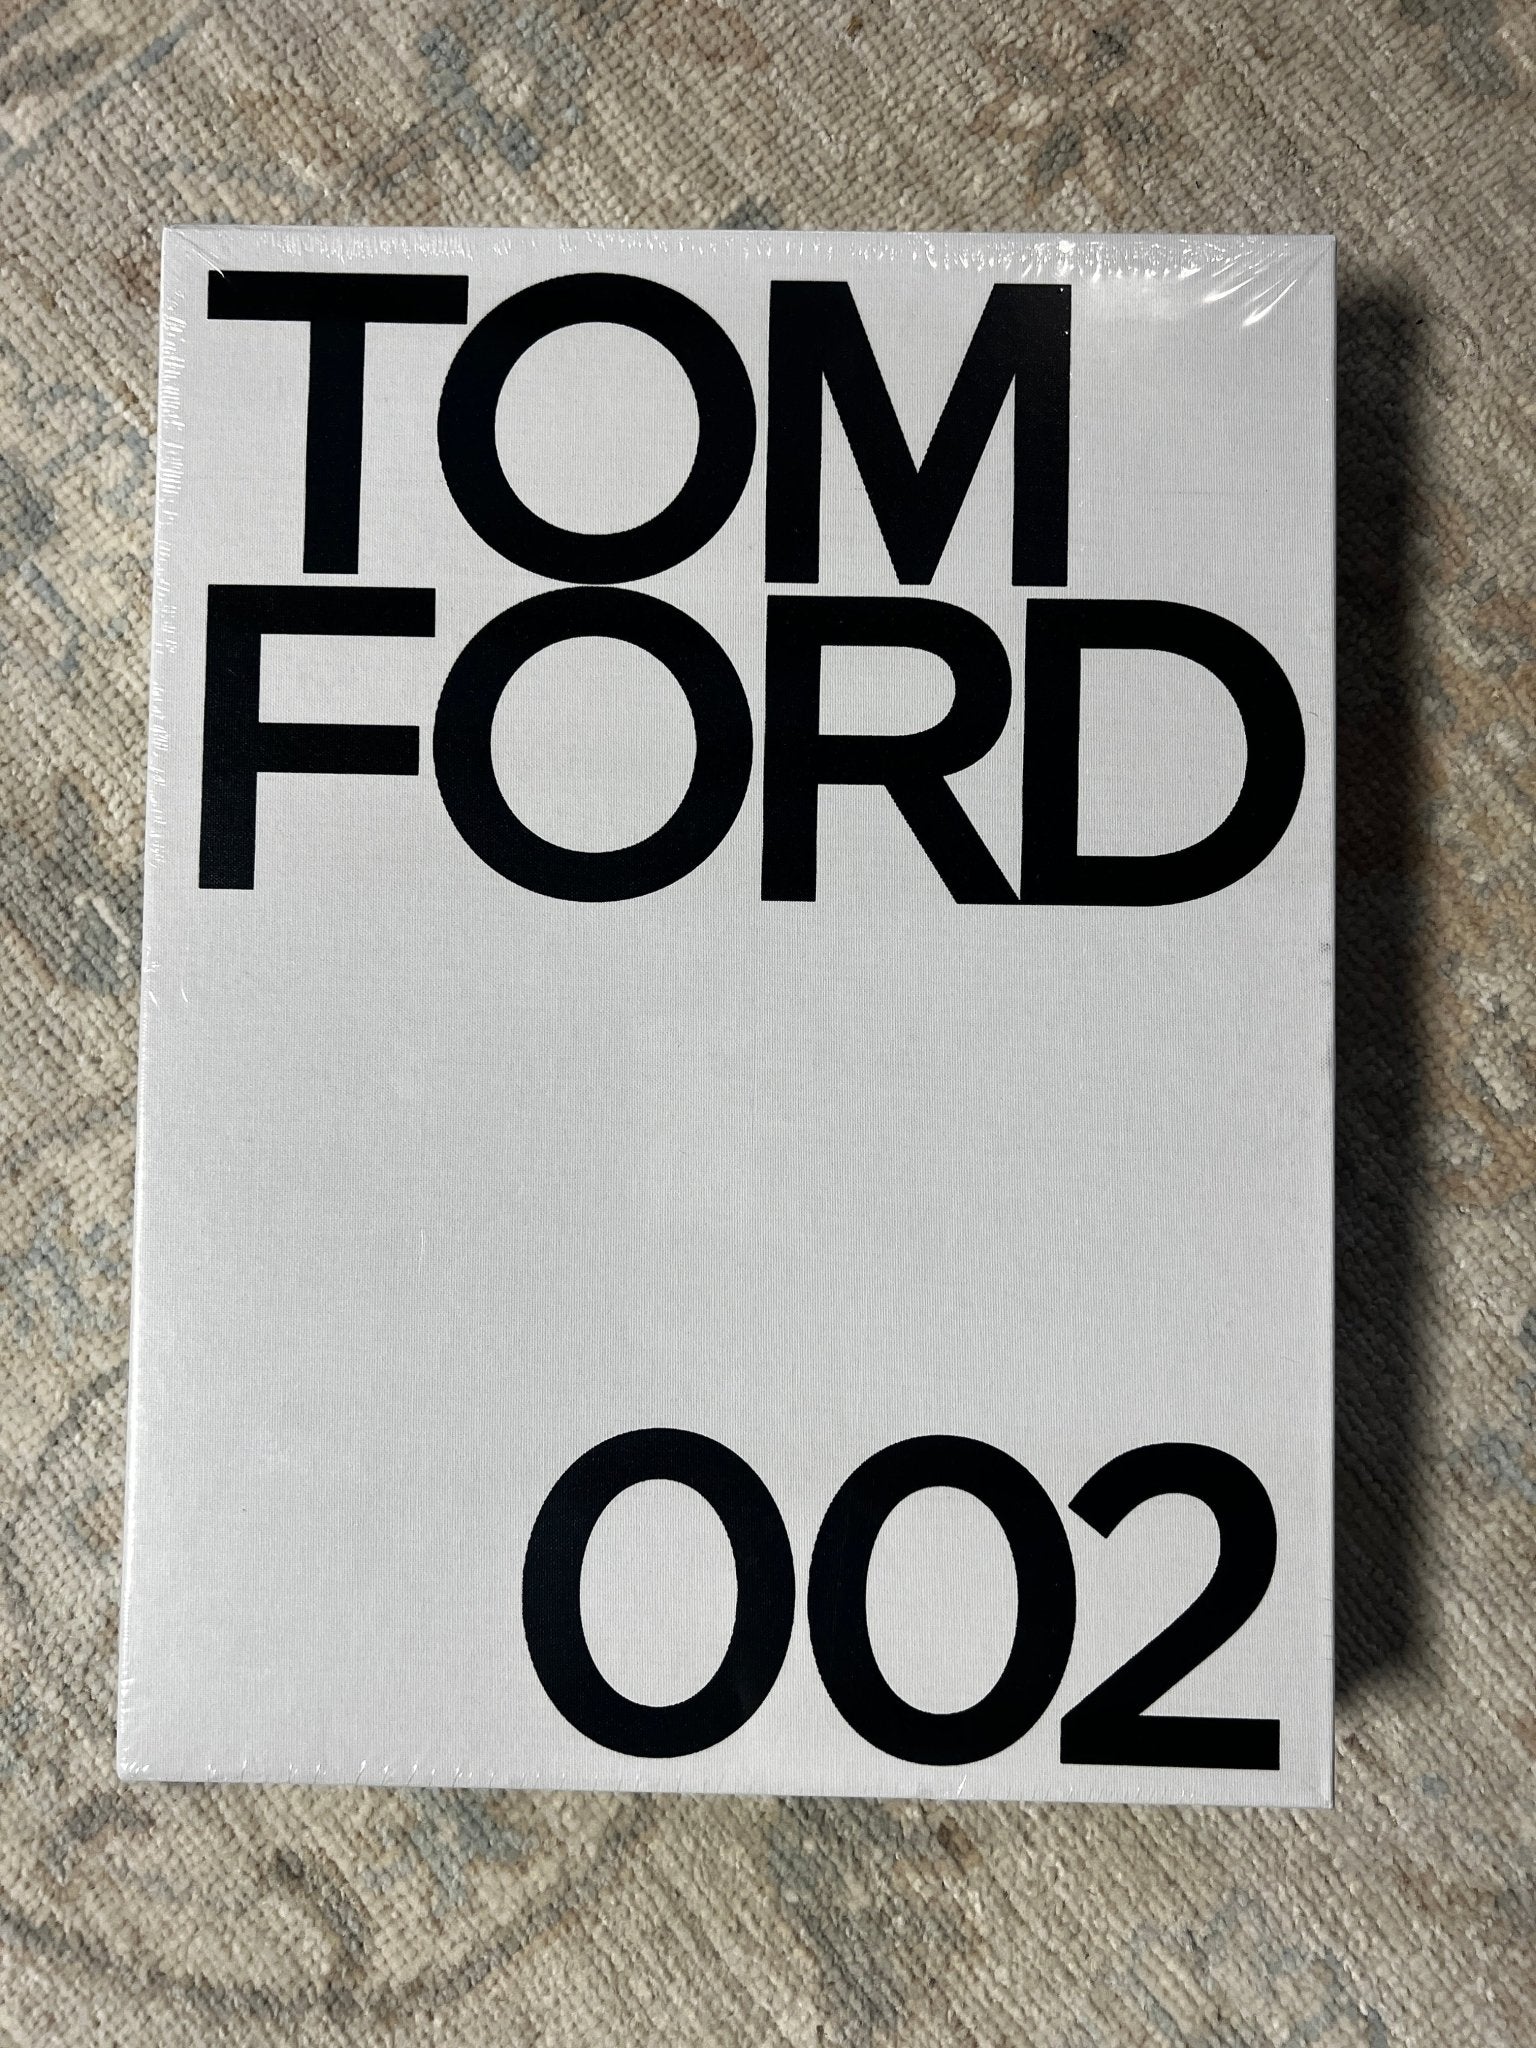 Tom Ford 002 Iconic Fashion Designer Coffee Table Book | Banana Manor Rug Company